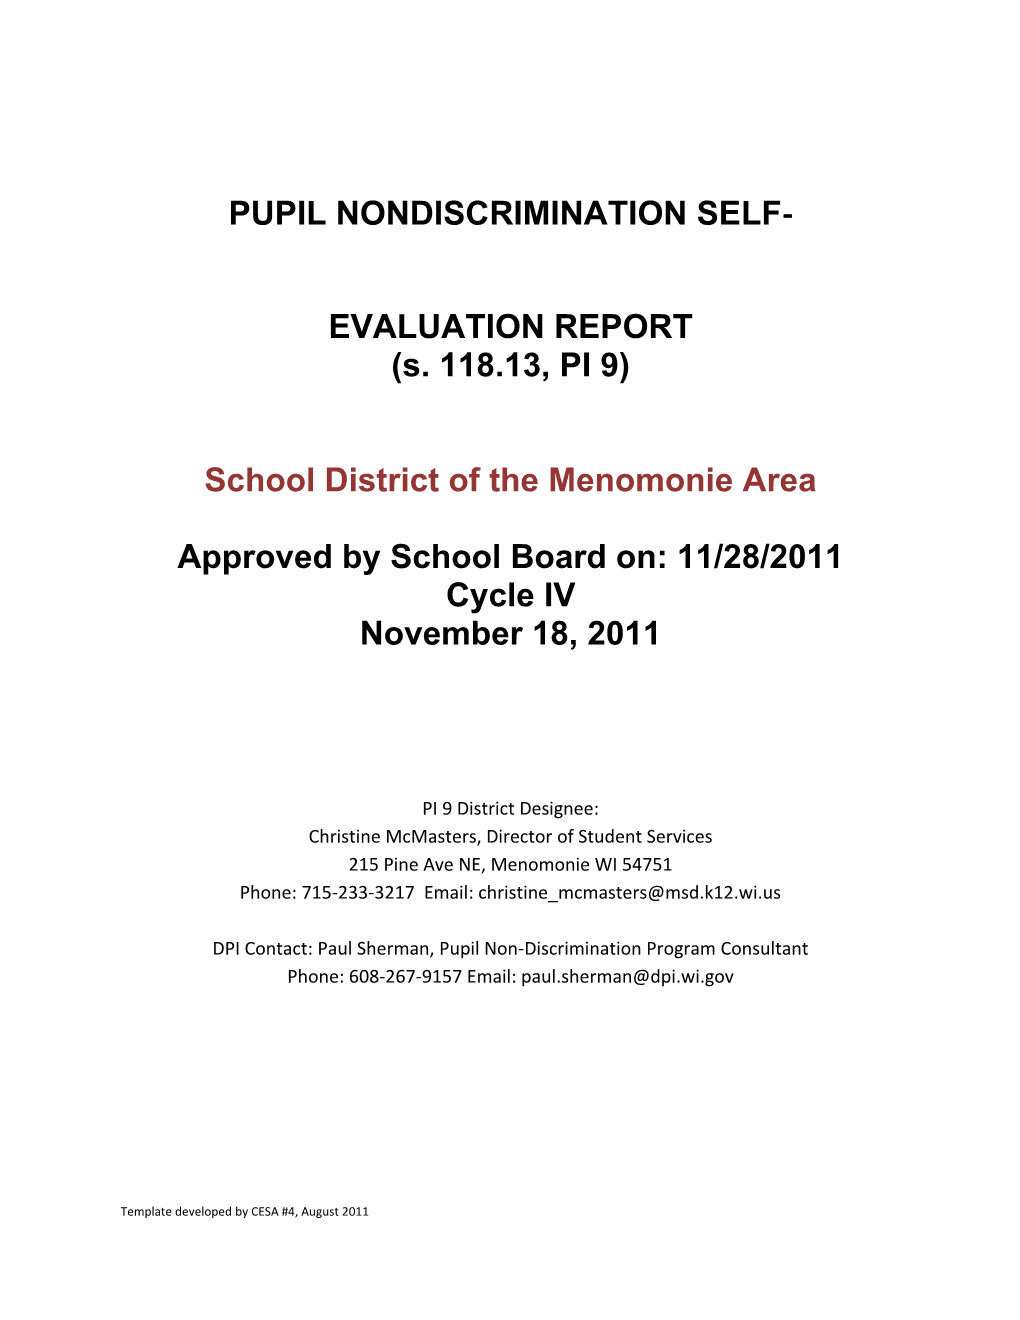 Pupil Nondiscrimination Self Evaluation Report